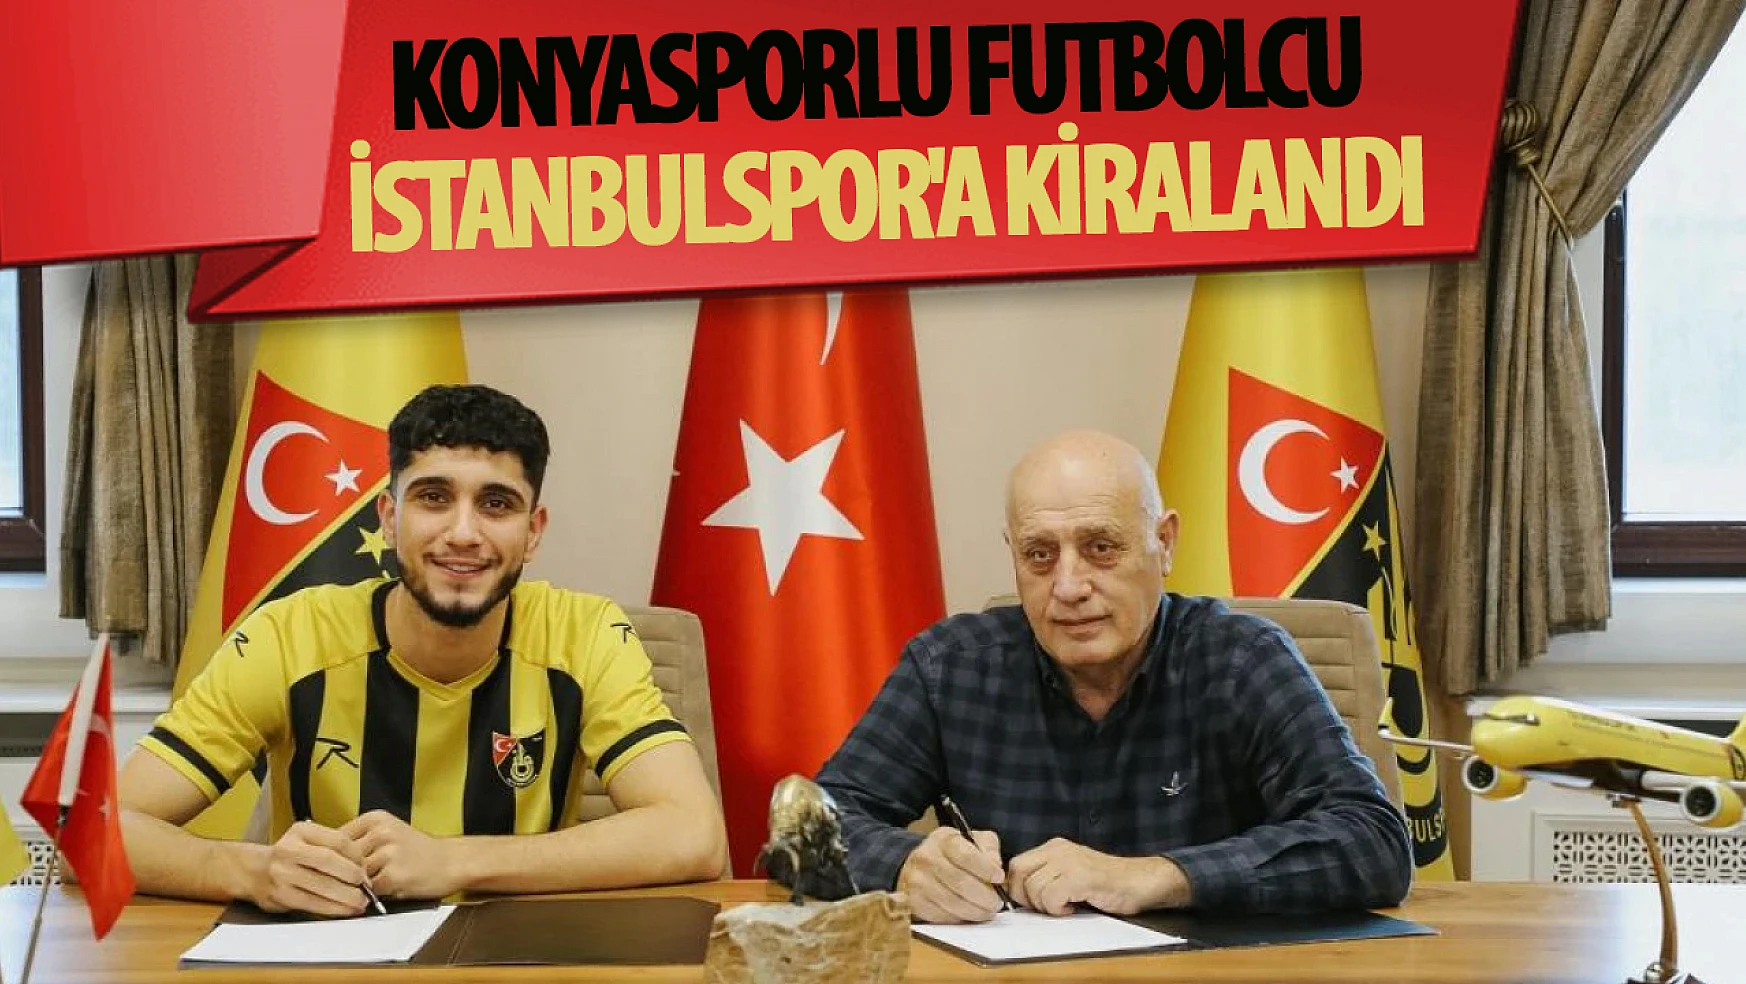 Konyaspor'lu futbolcu İstanbulspor'a kiralandı!